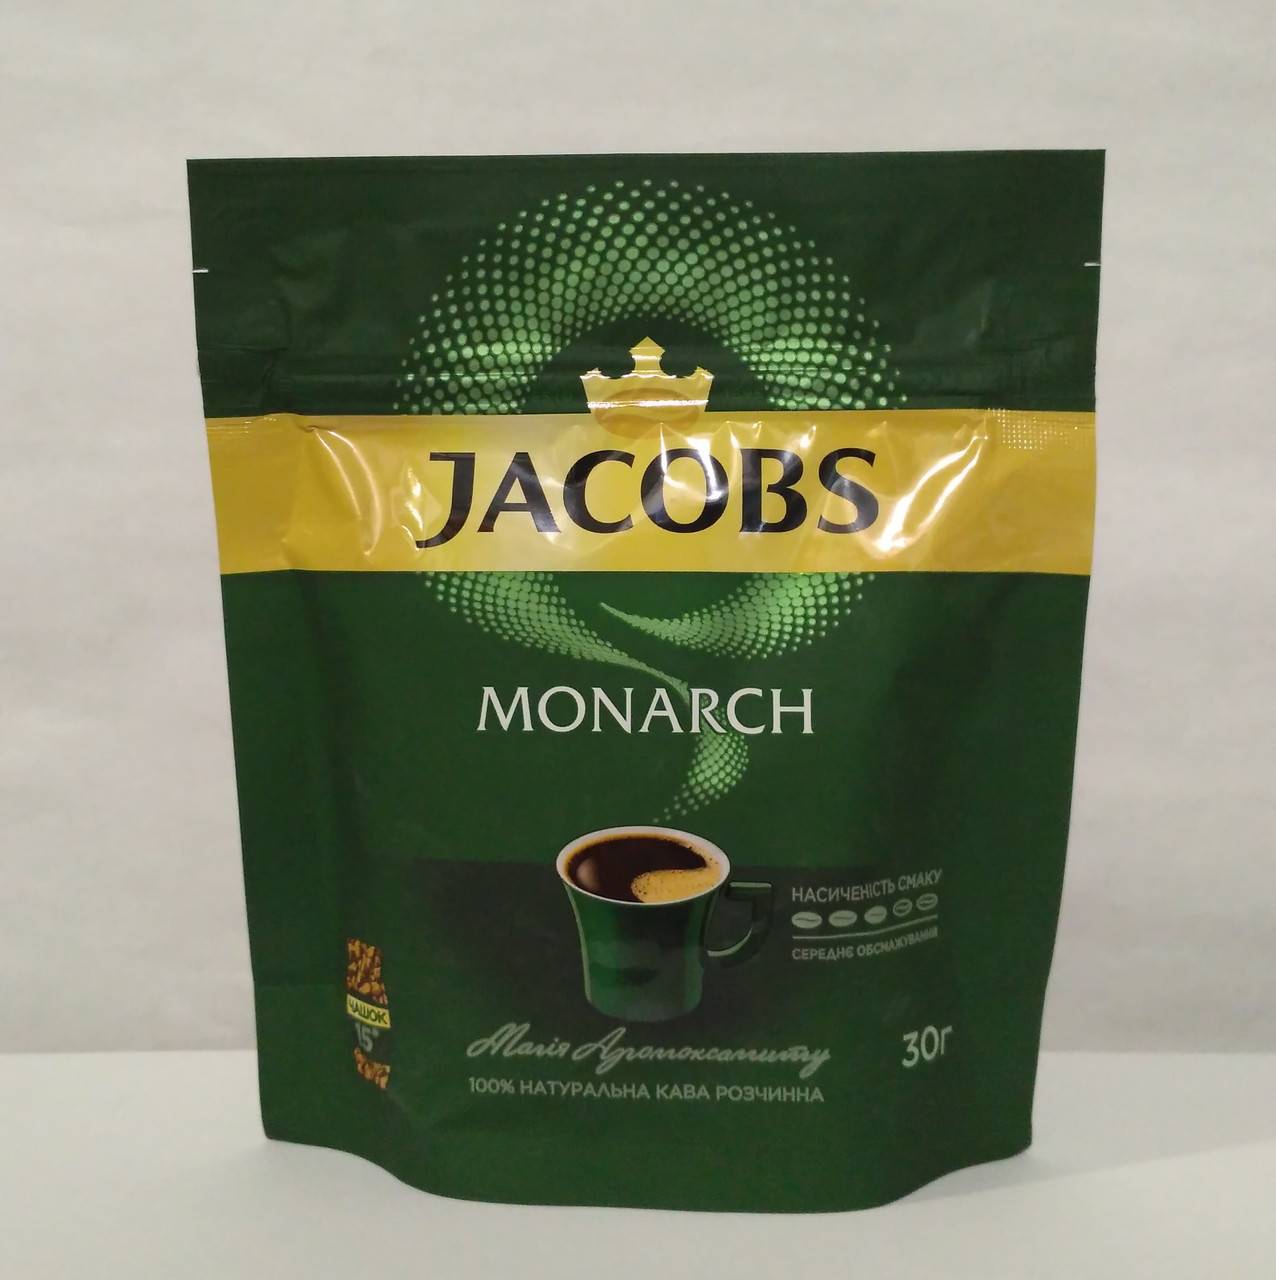 Кофе якобс монарх: история бренда jacobs monarch, ассортимент